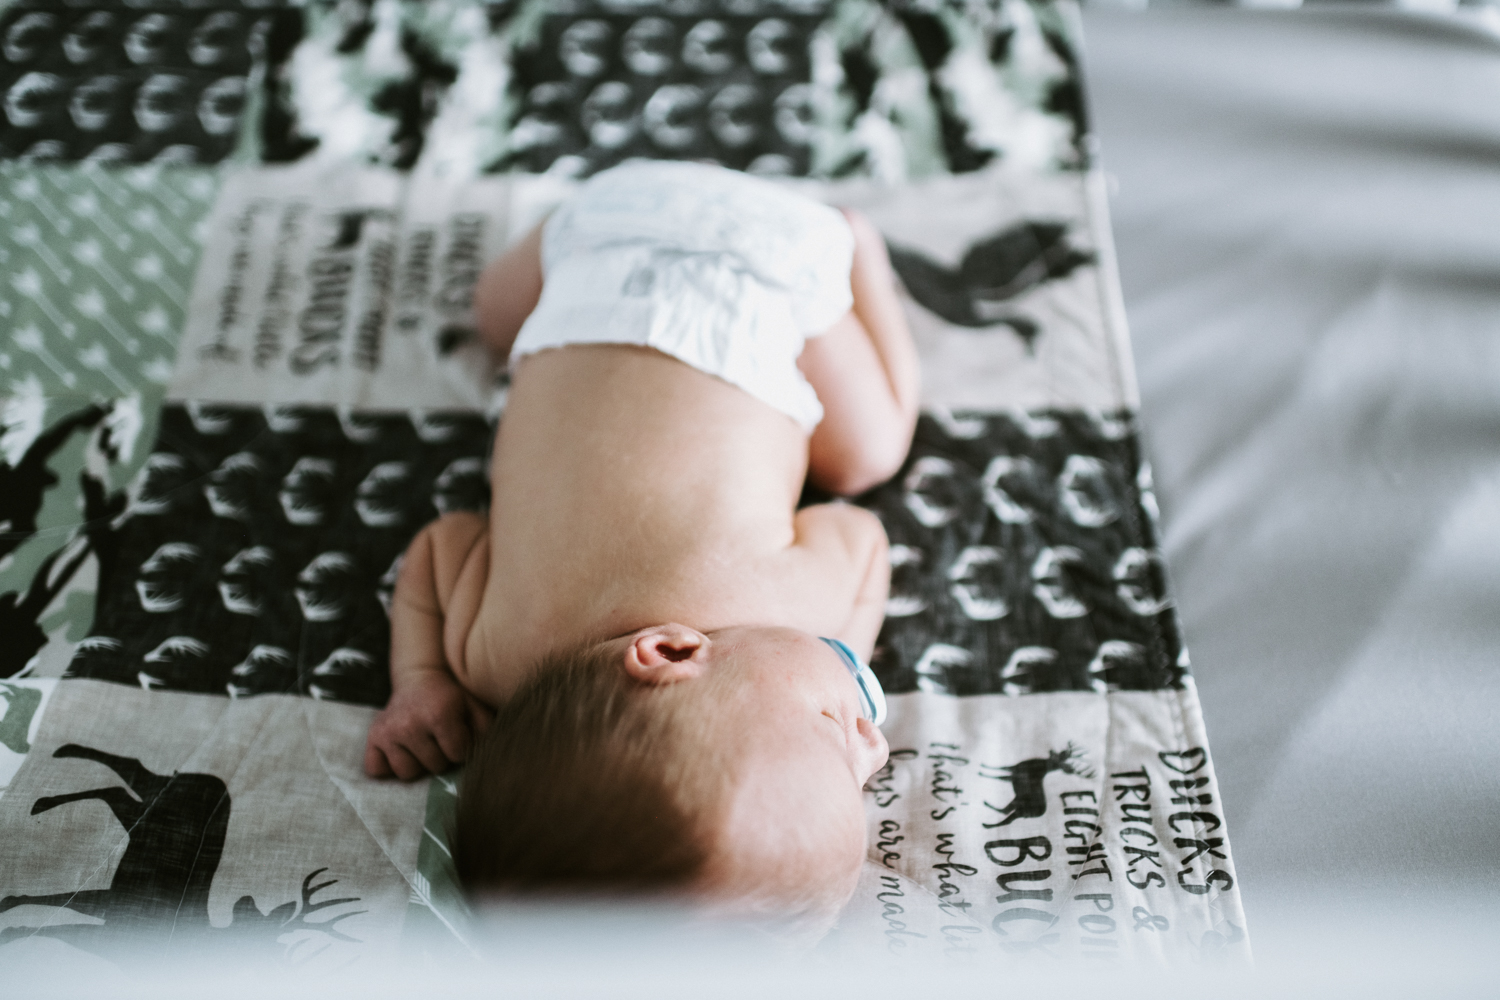 newborn baby boy lying in crib with checkered blanket